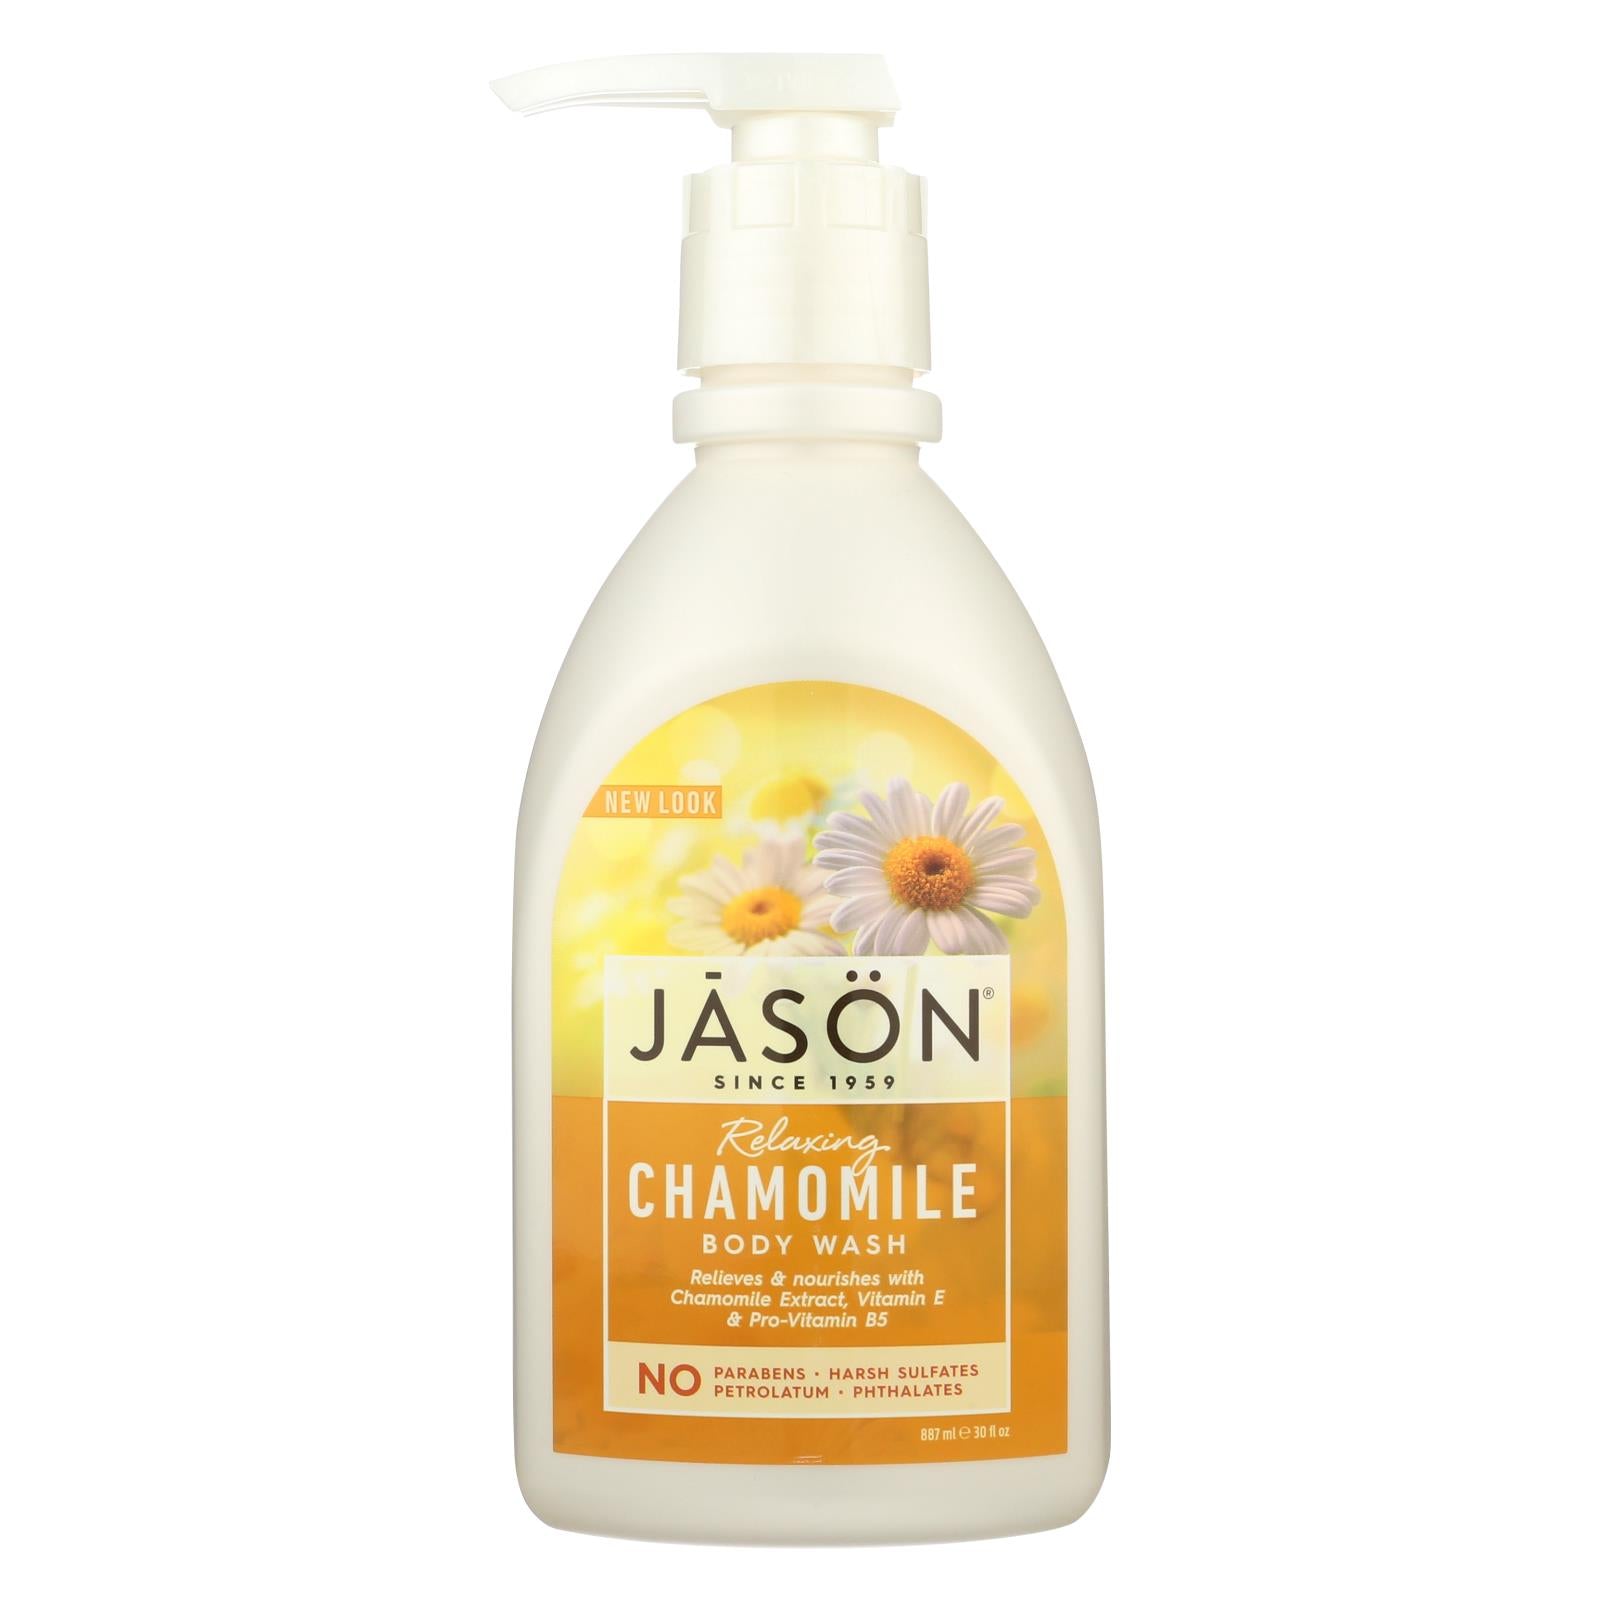 Jason Pure Natural Body Wash Chamomile - 30 Fl Oz